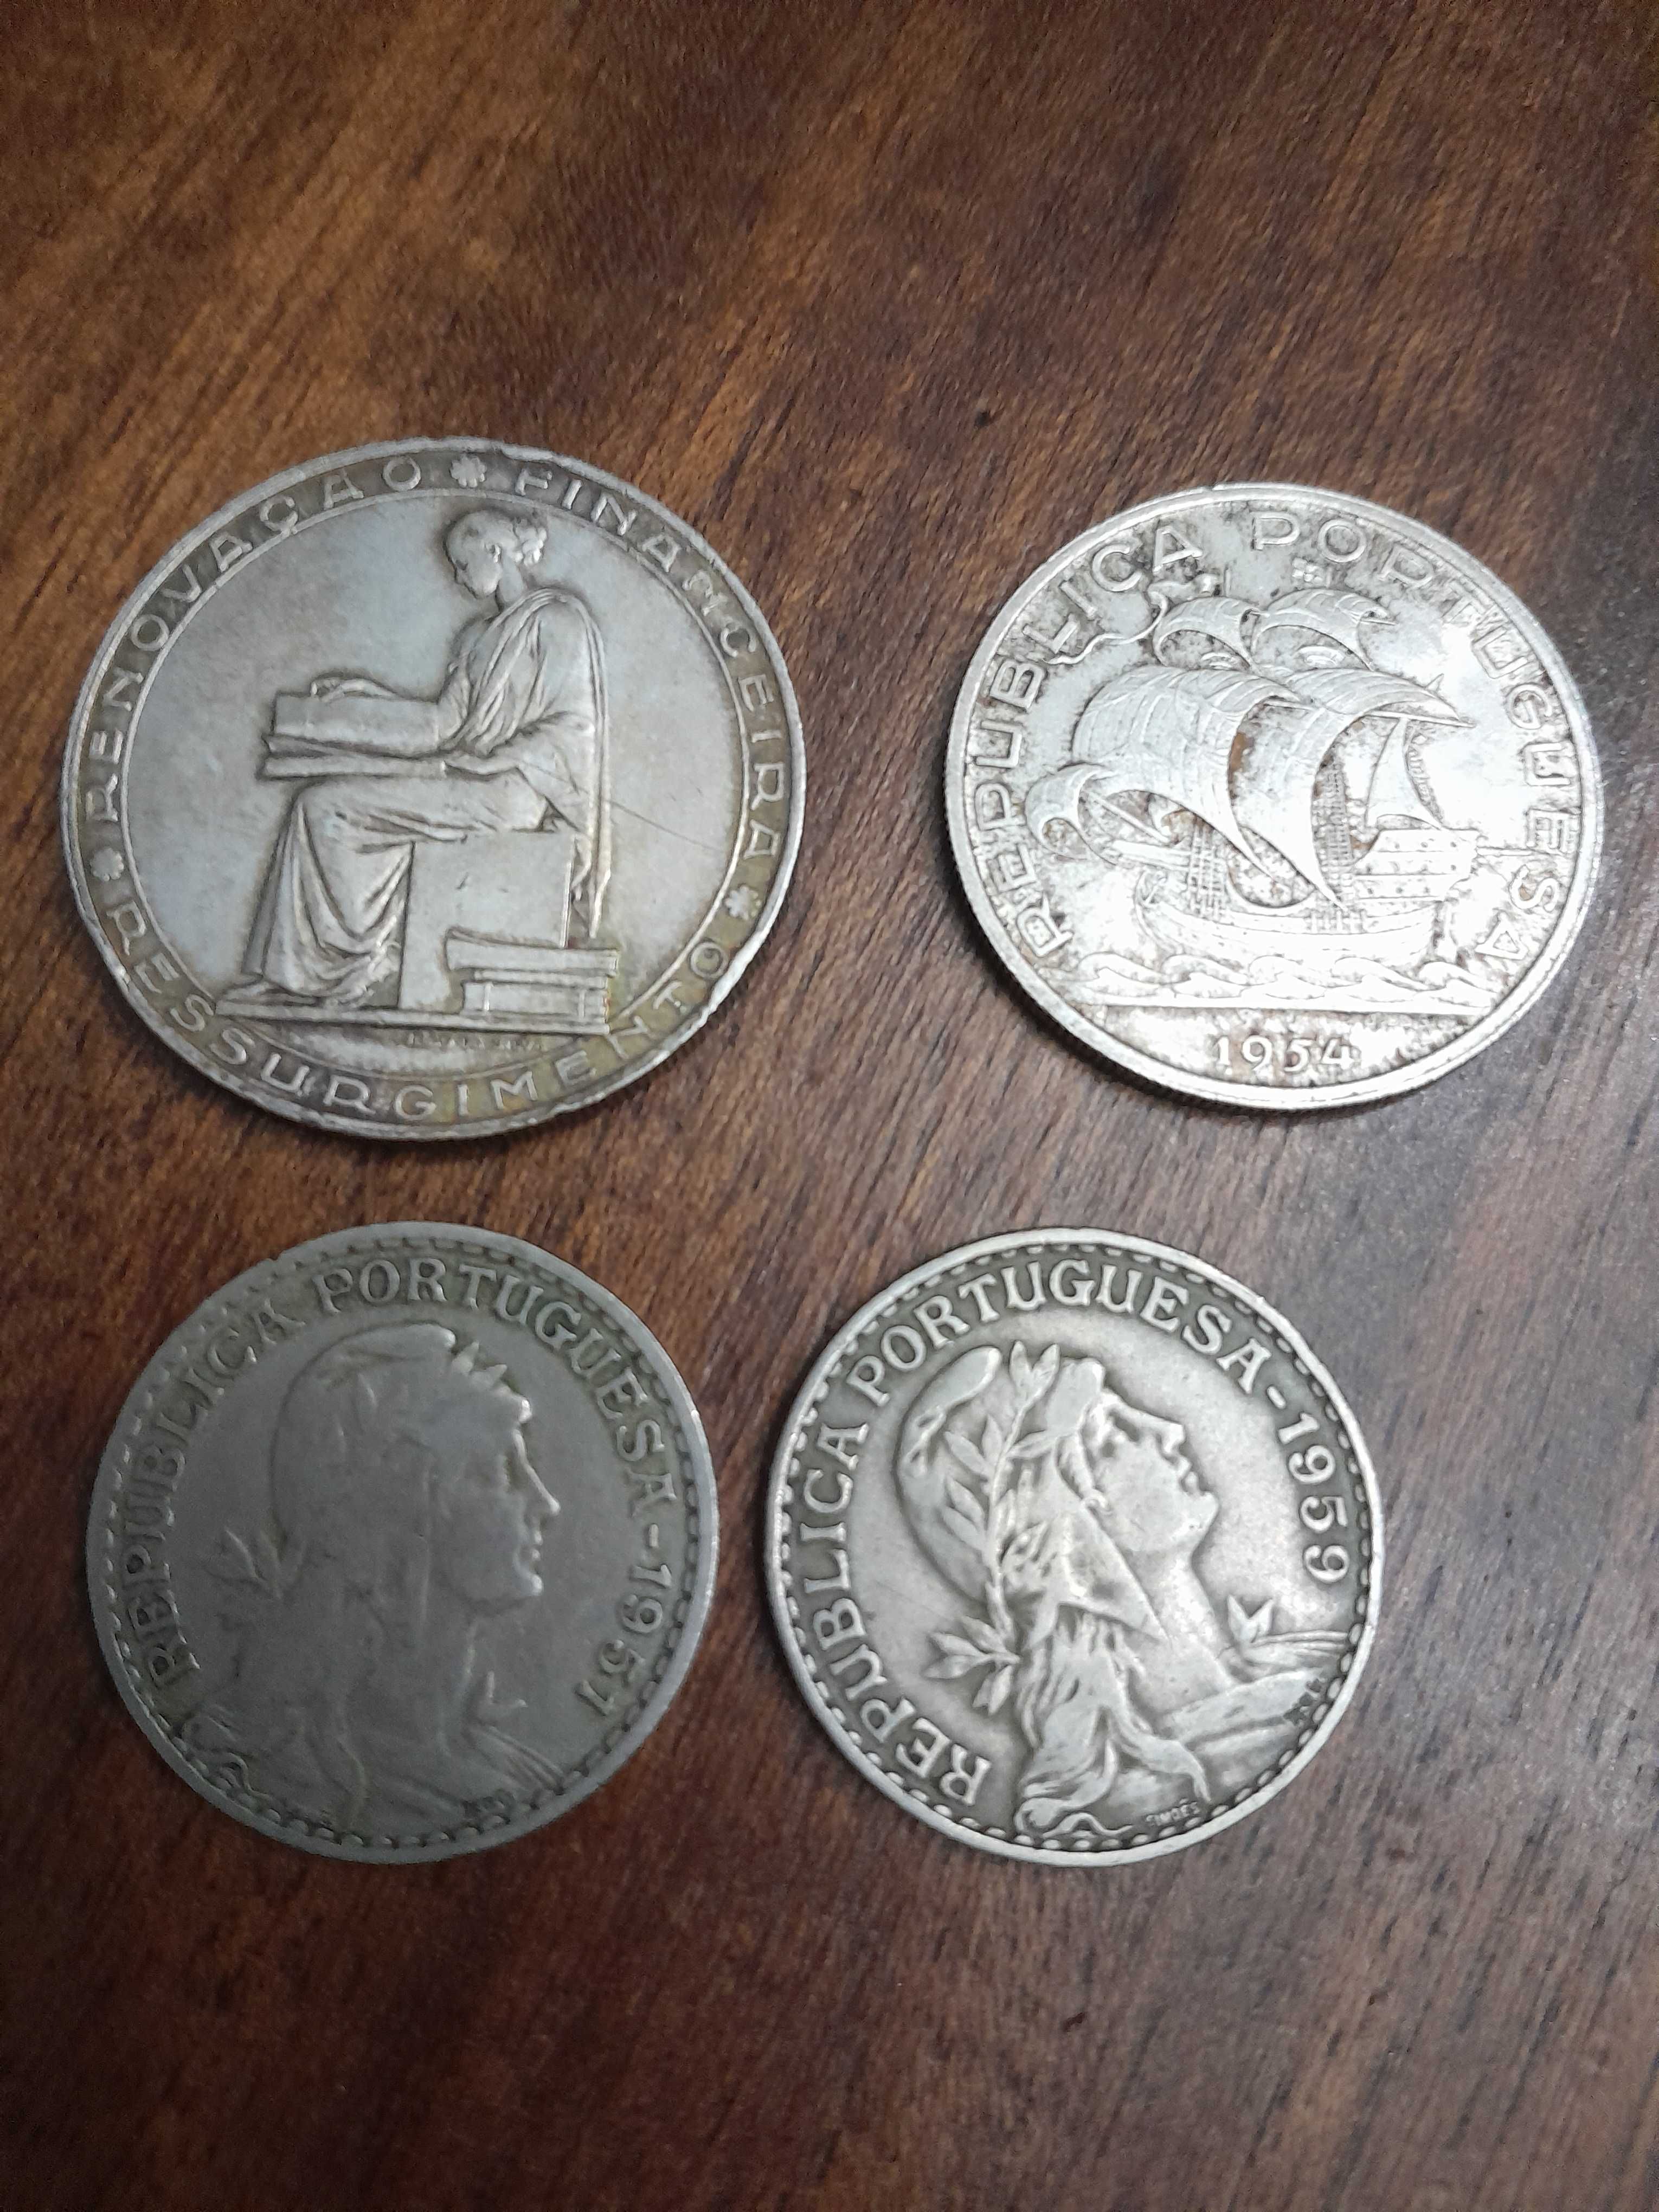 Vendo conjunto de moedas.44 moedas de 50 centavos 1 de 50 escudos